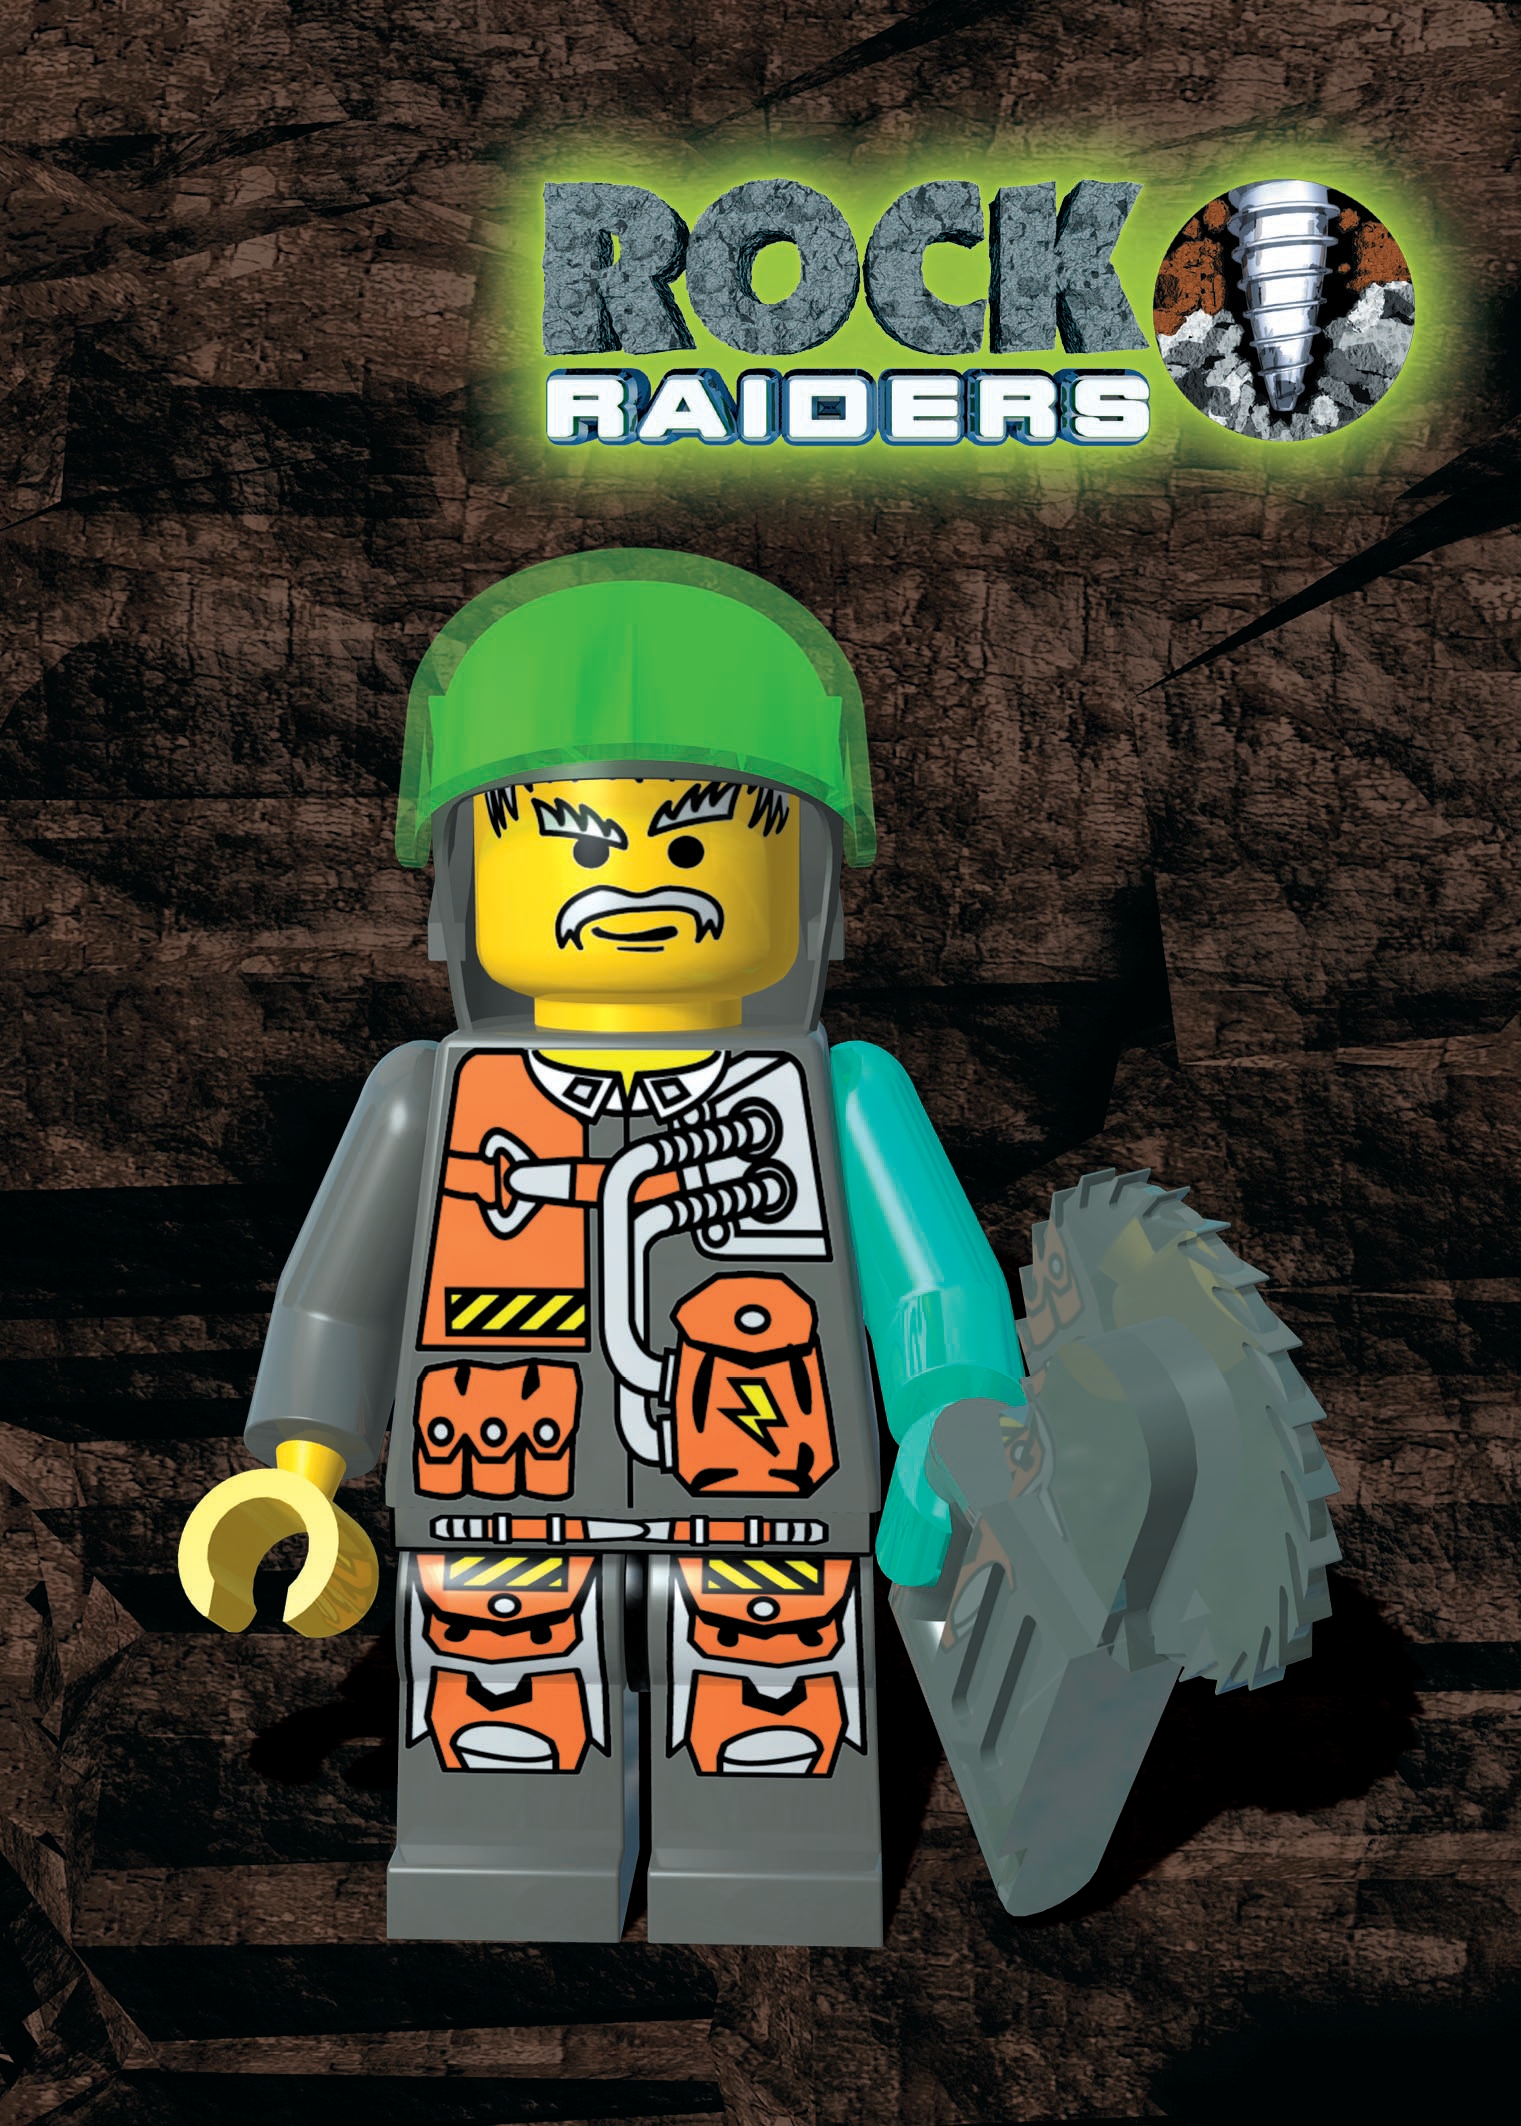 lego rock raiders game wiki